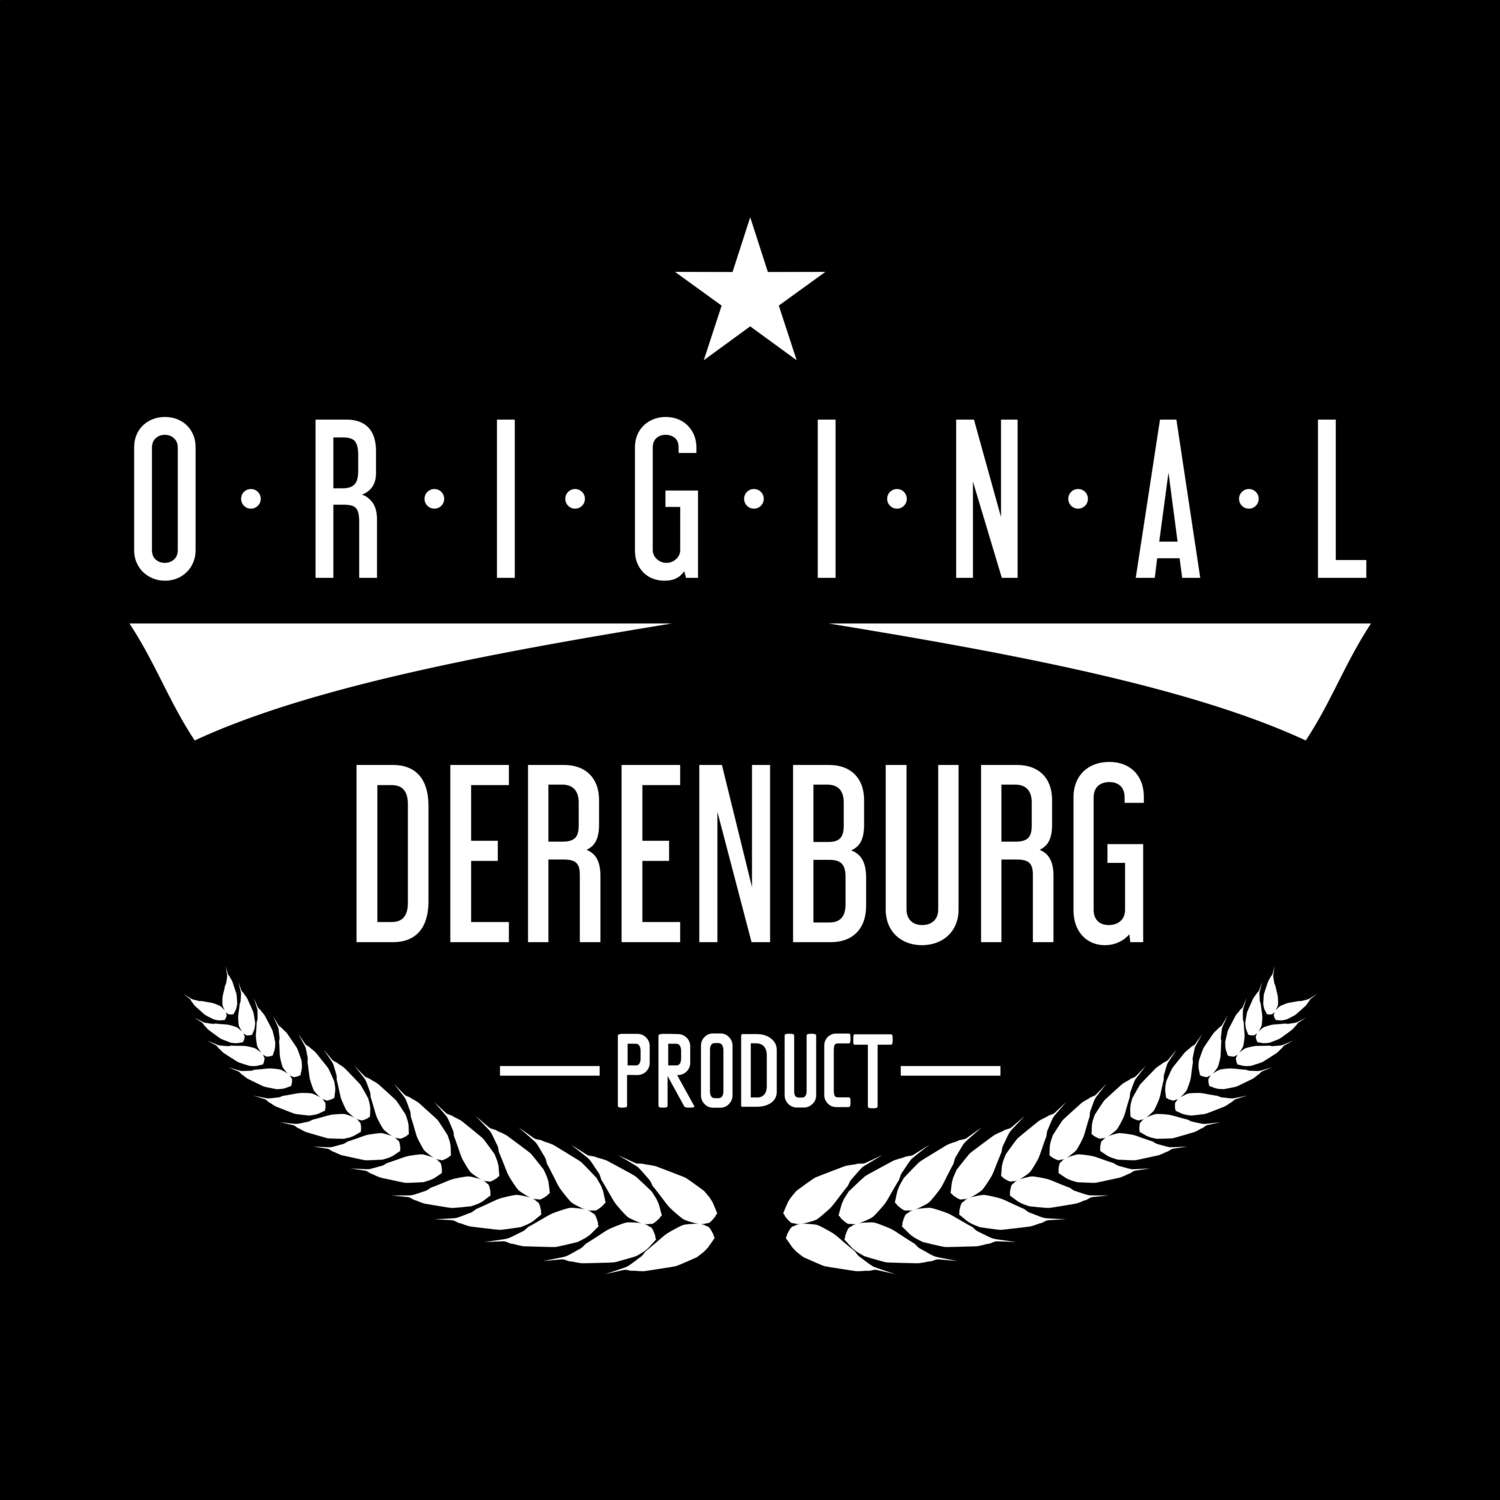 Derenburg T-Shirt »Original Product«